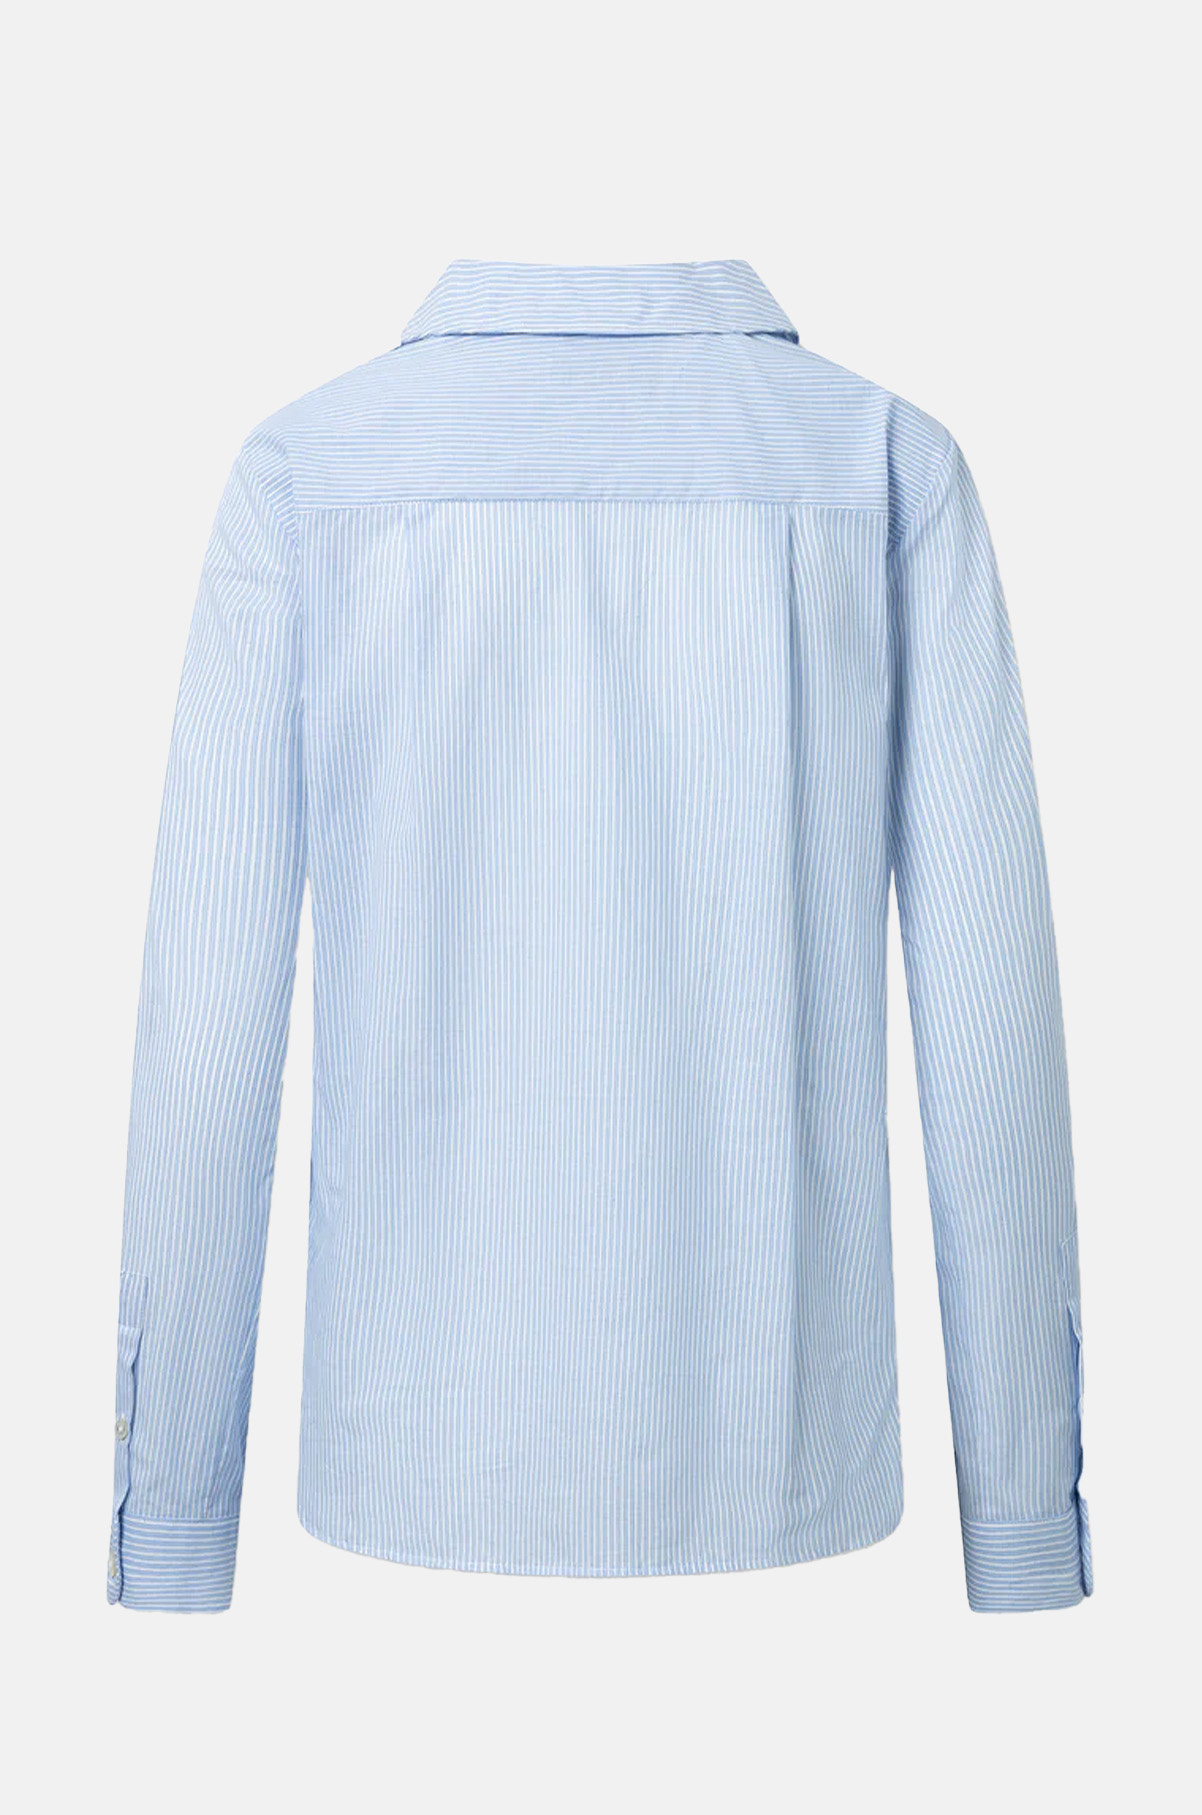 Sue Shirt in Small Blue Stripe-6